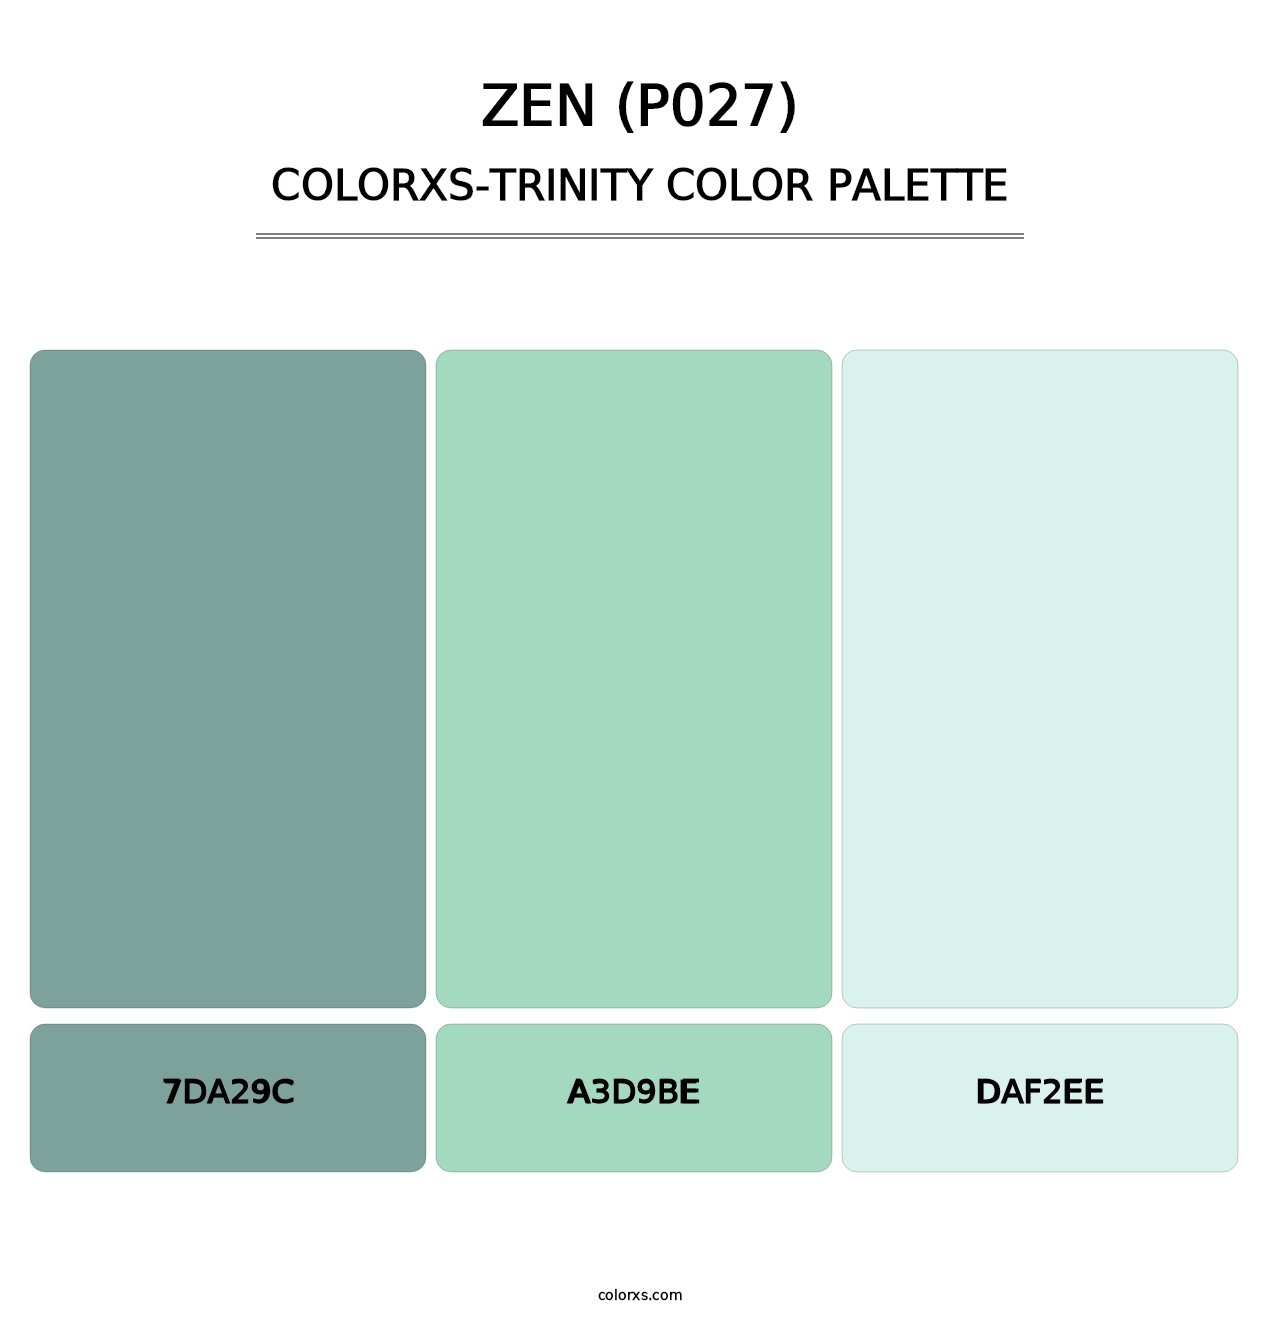 Zen (P027) - Colorxs Trinity Palette